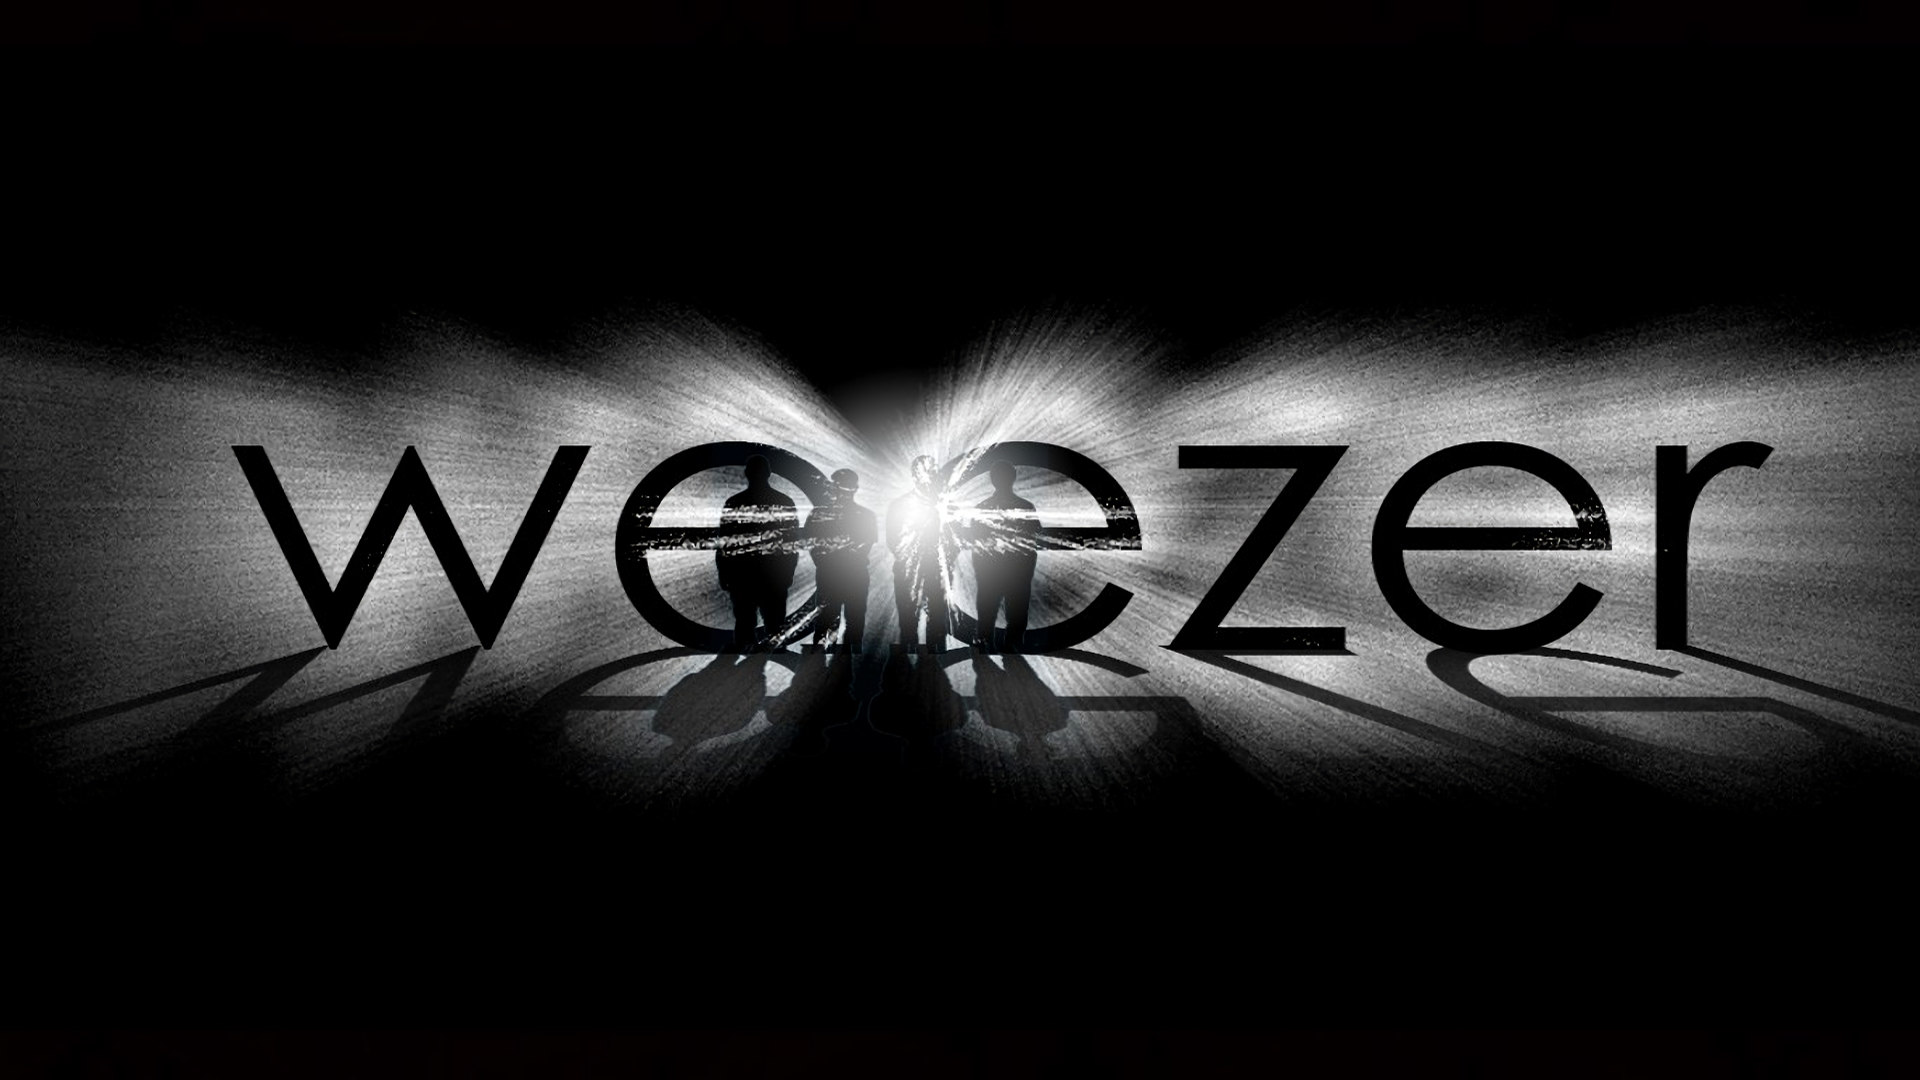 Weezer HD Wallpaper Background Image Id